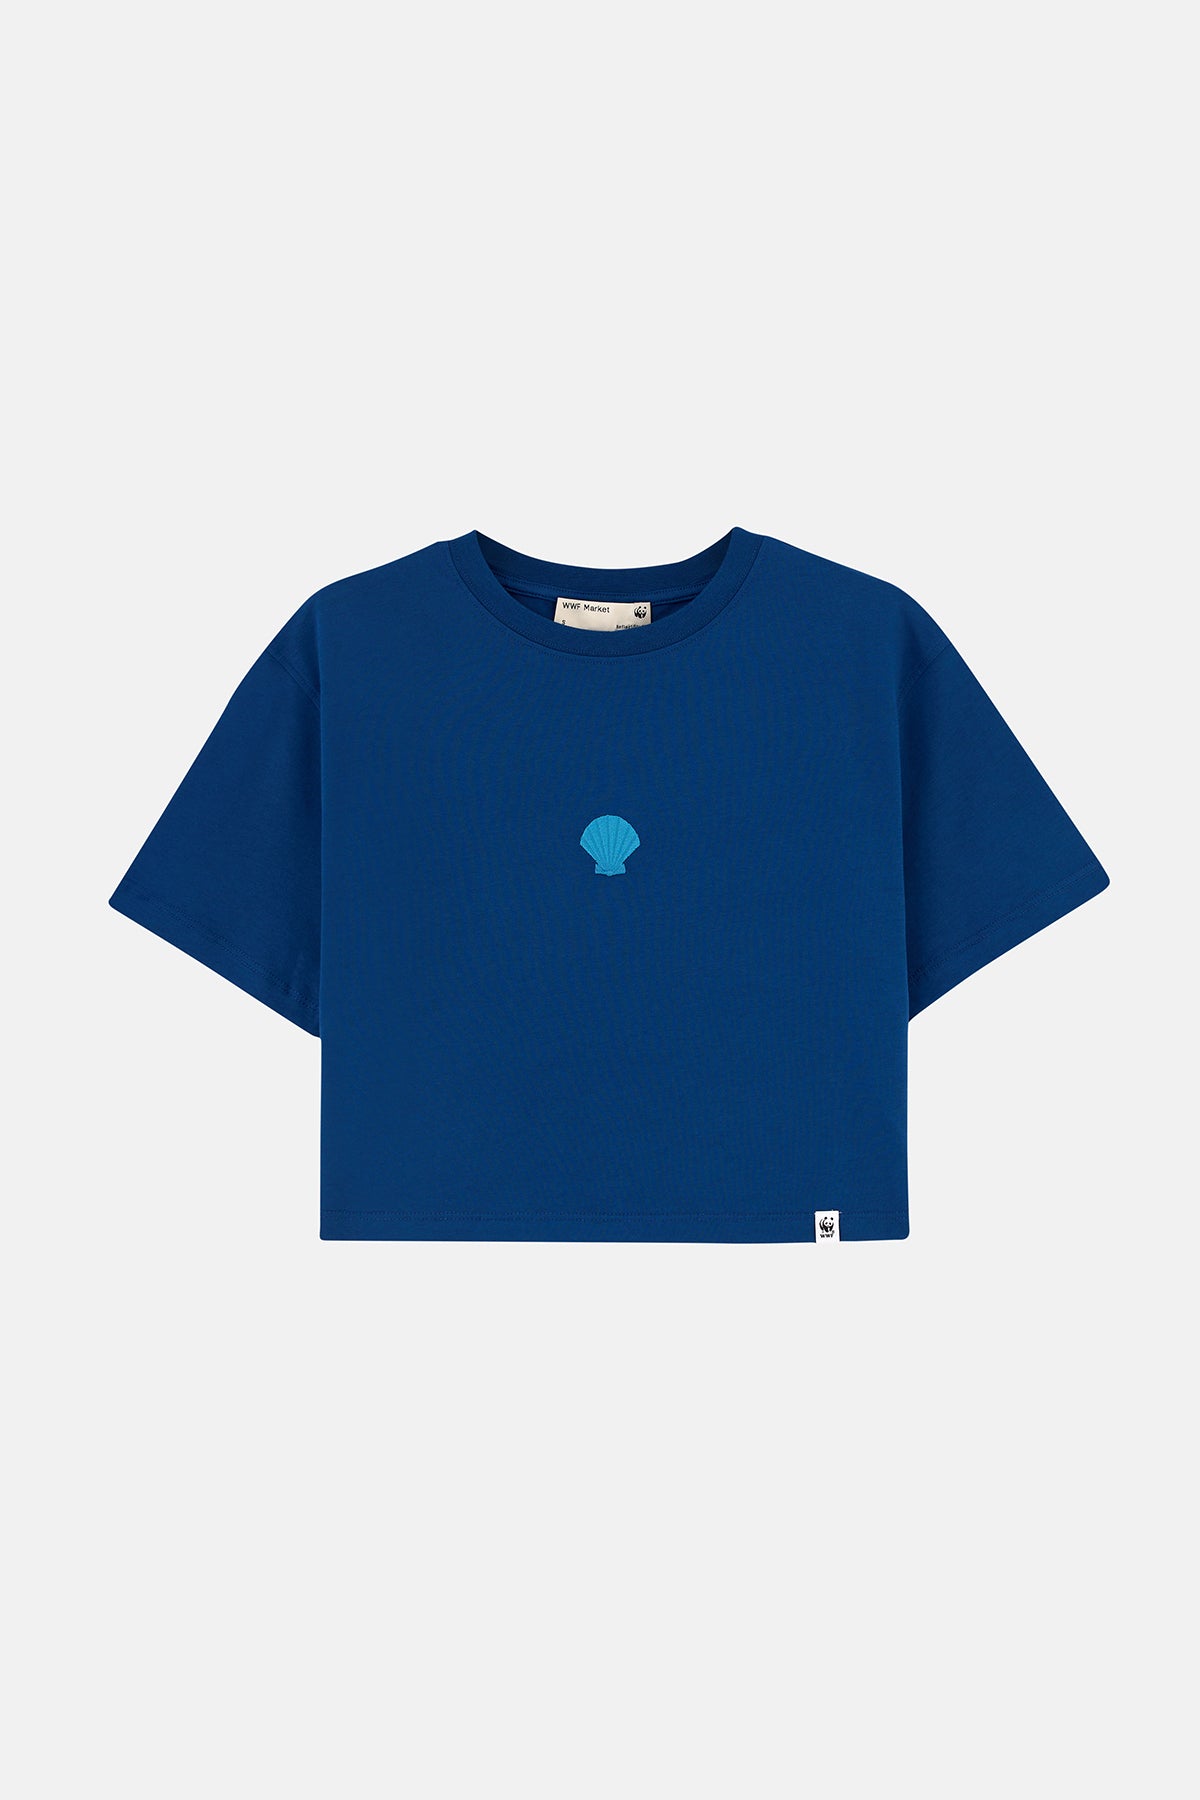 Deniz Kabuğu Supreme Crop T-shirt  - Lacivert